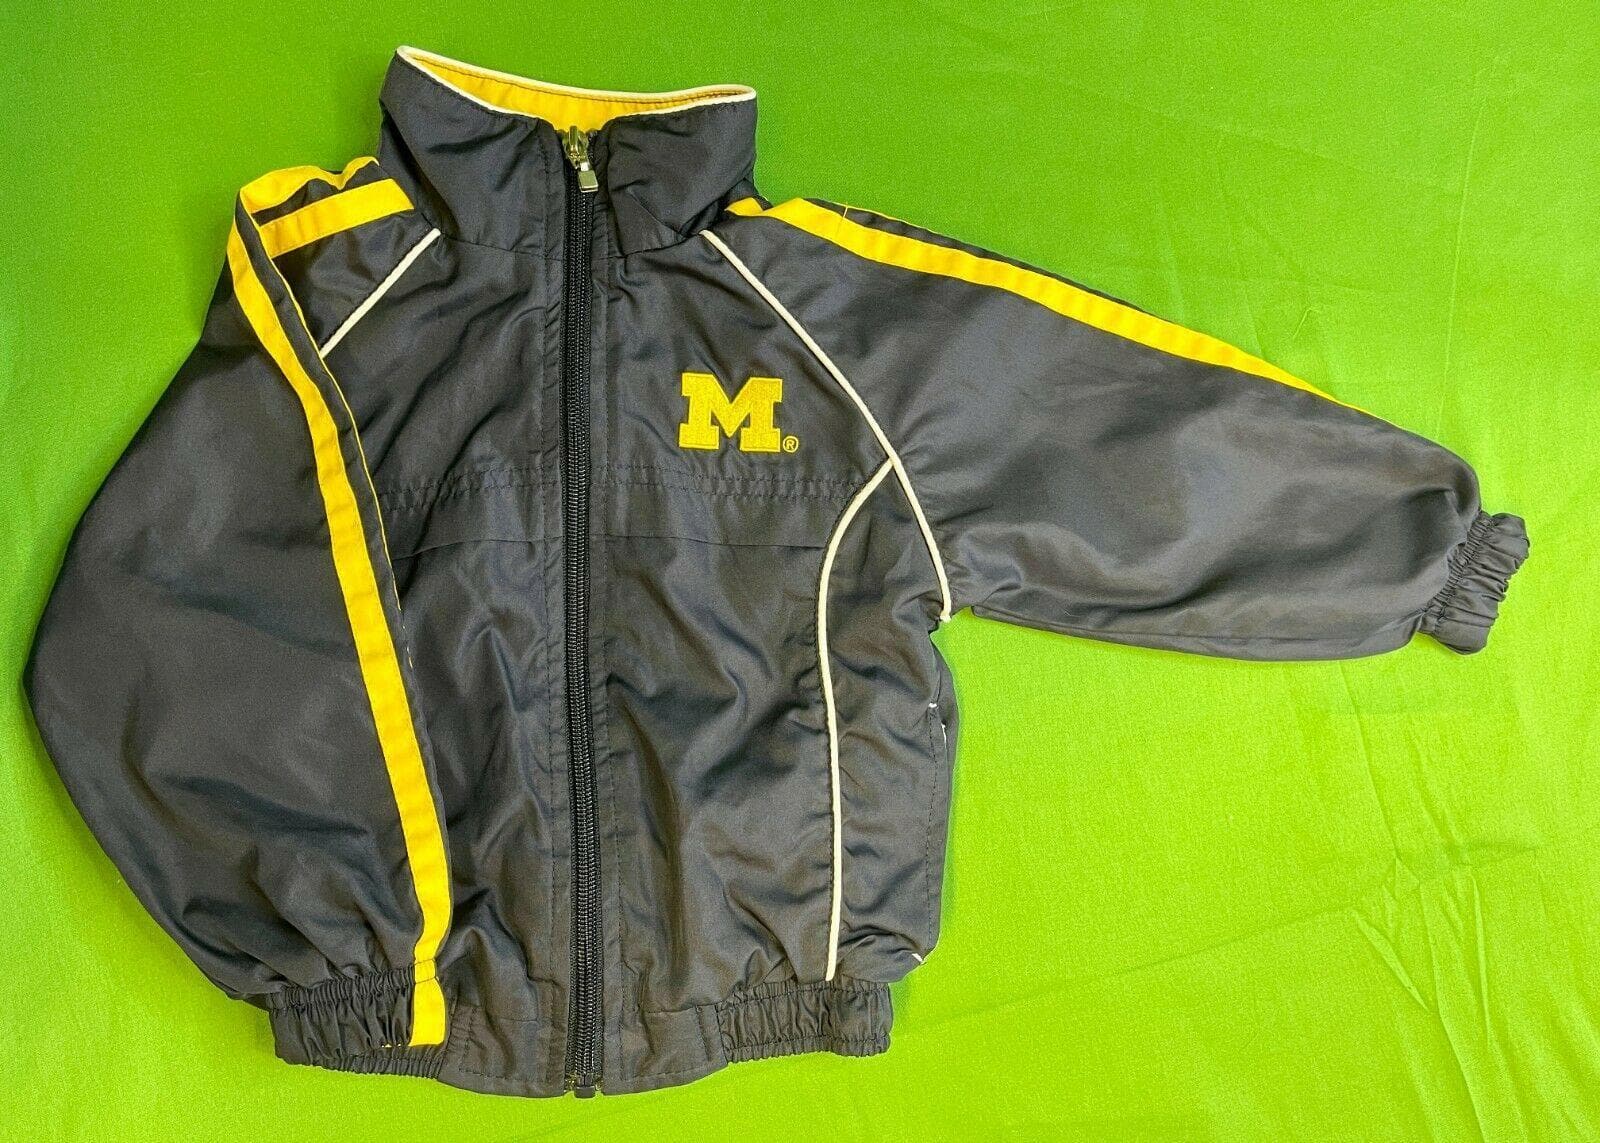 NCAA Michigan Wolverines Windbreaker Jacket Toddler 24 months